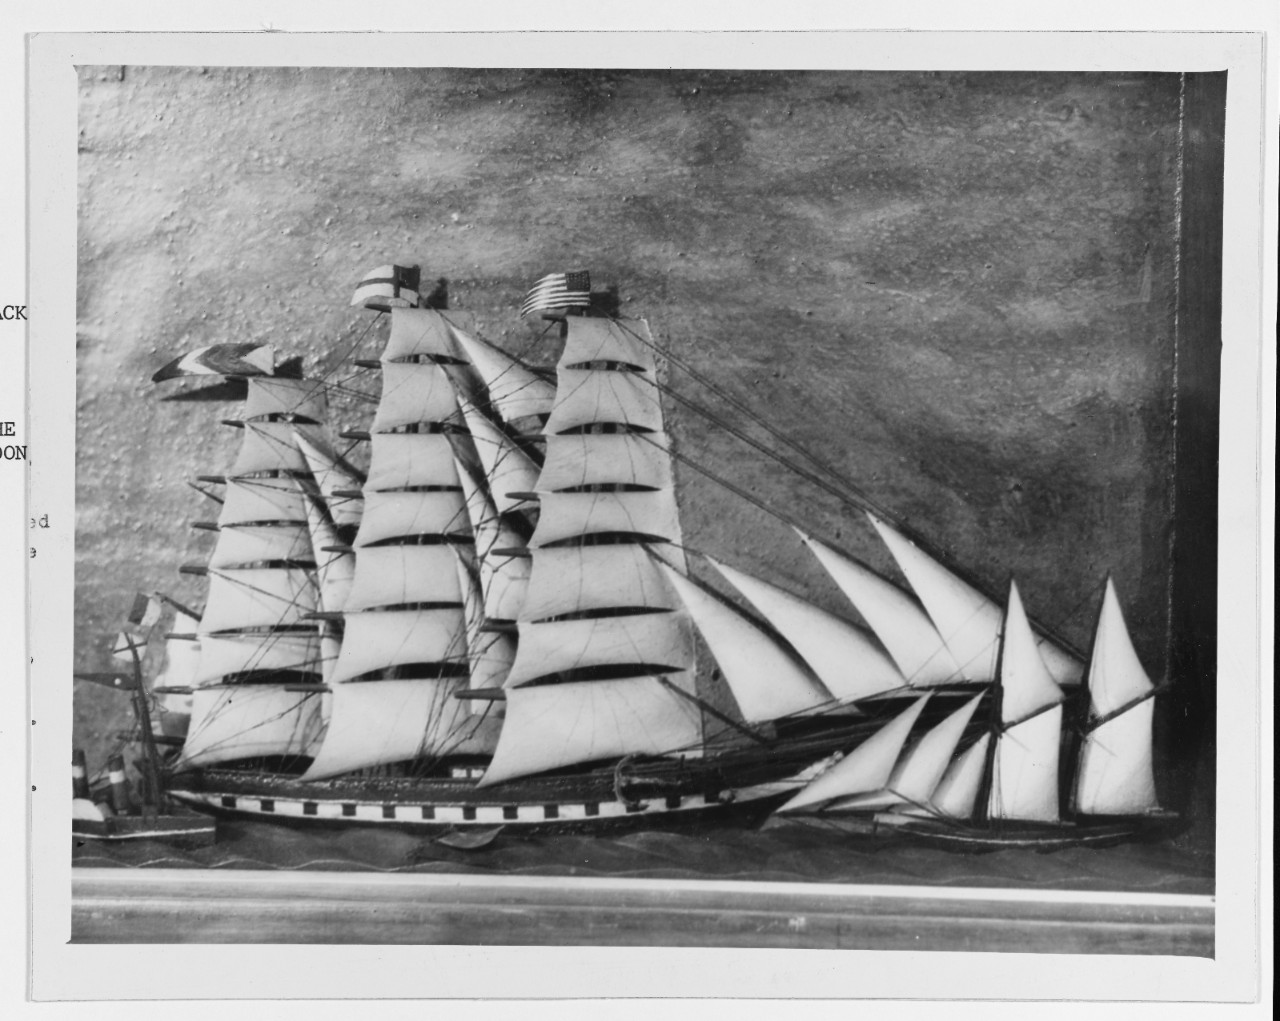 American packet ship GENERAL JACKSON, circa 1850